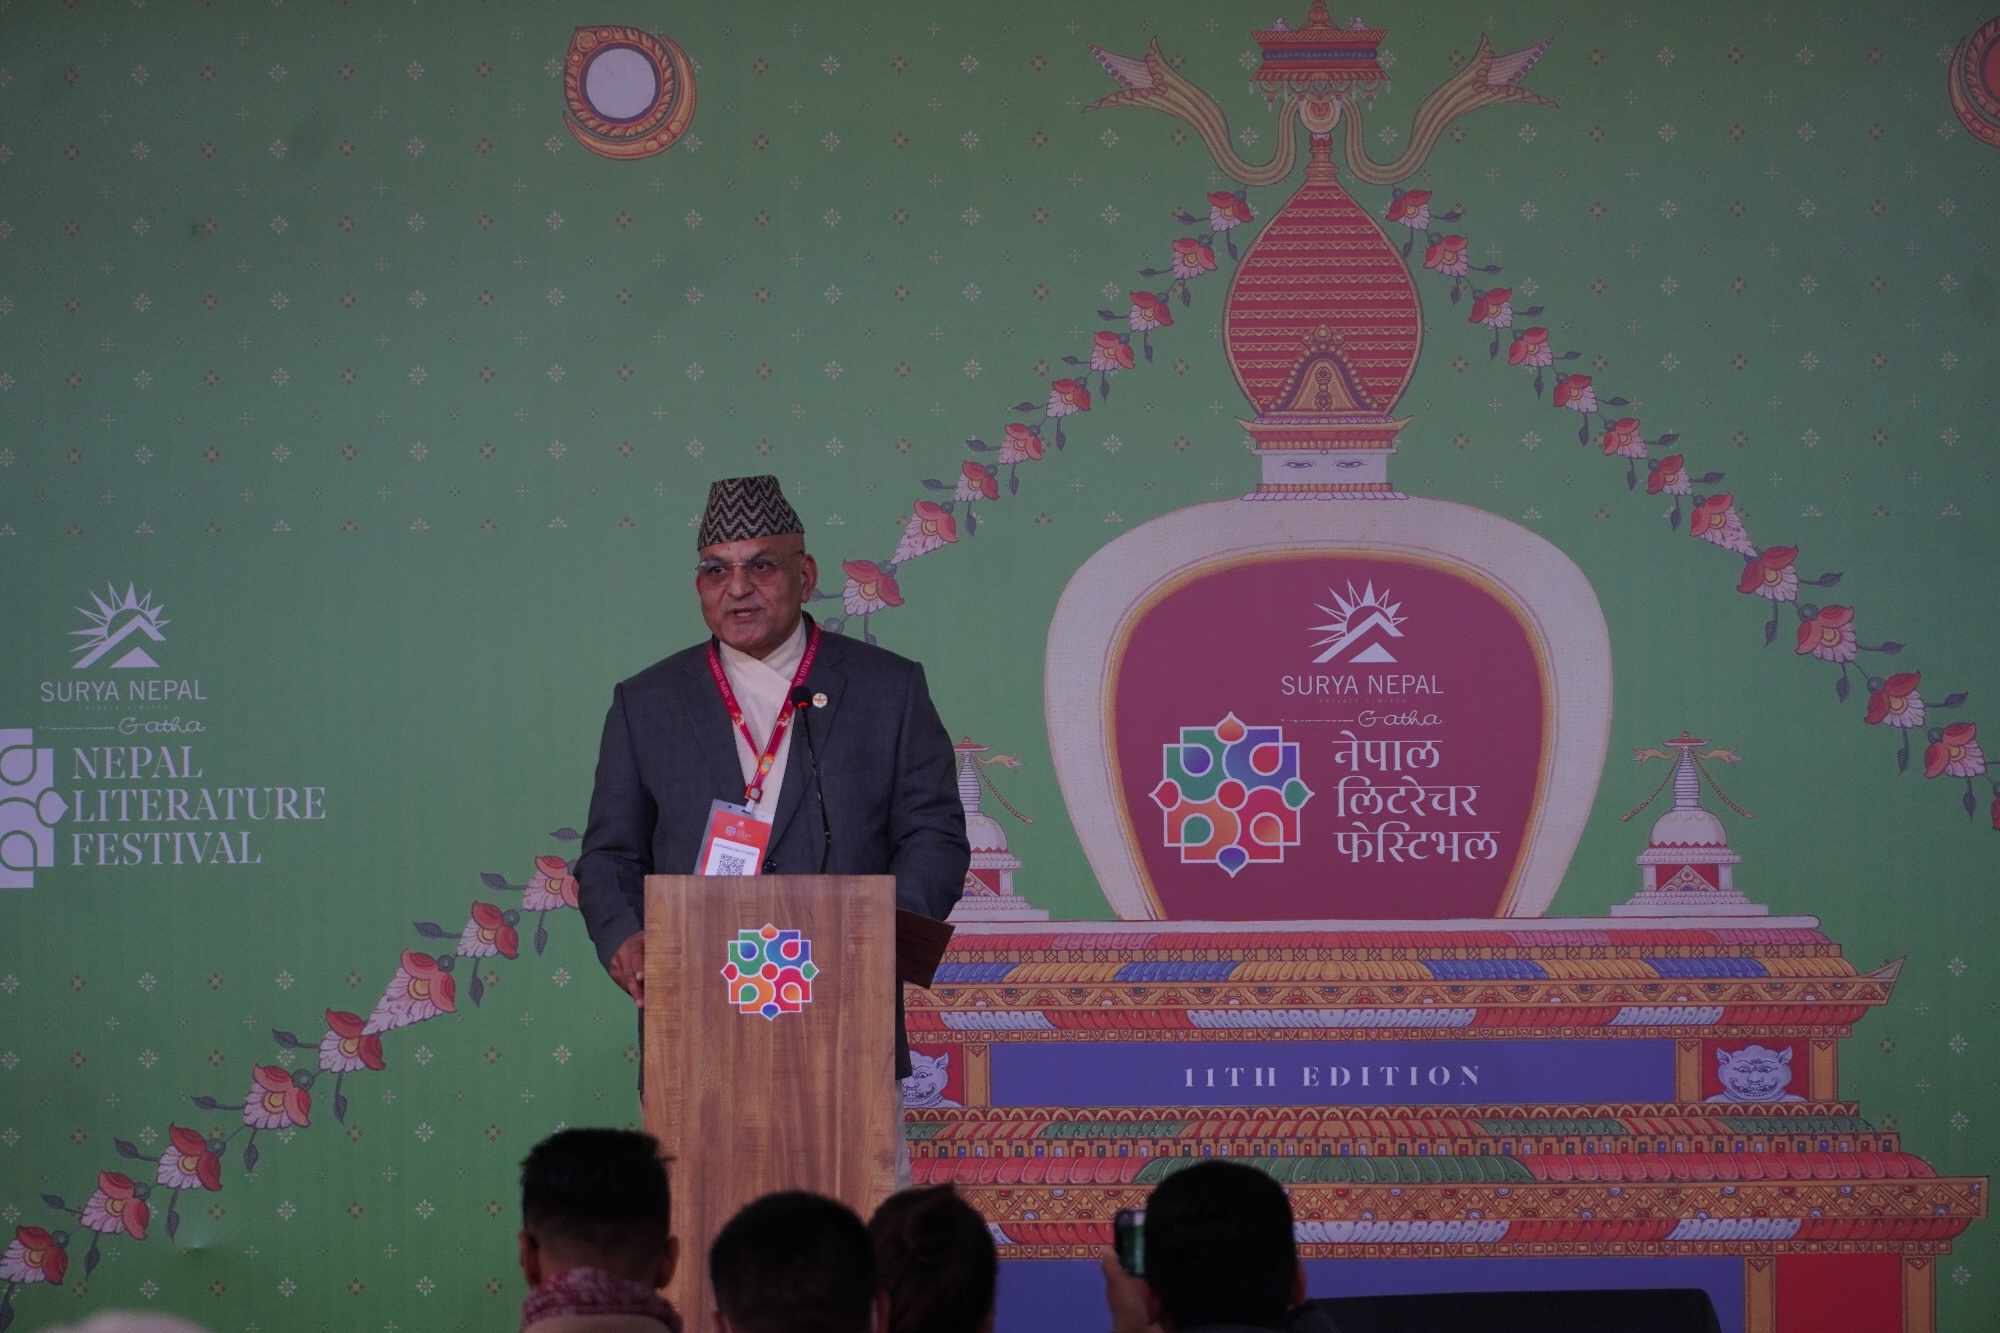 Nepal Literature Festival kicks off in Pokhara